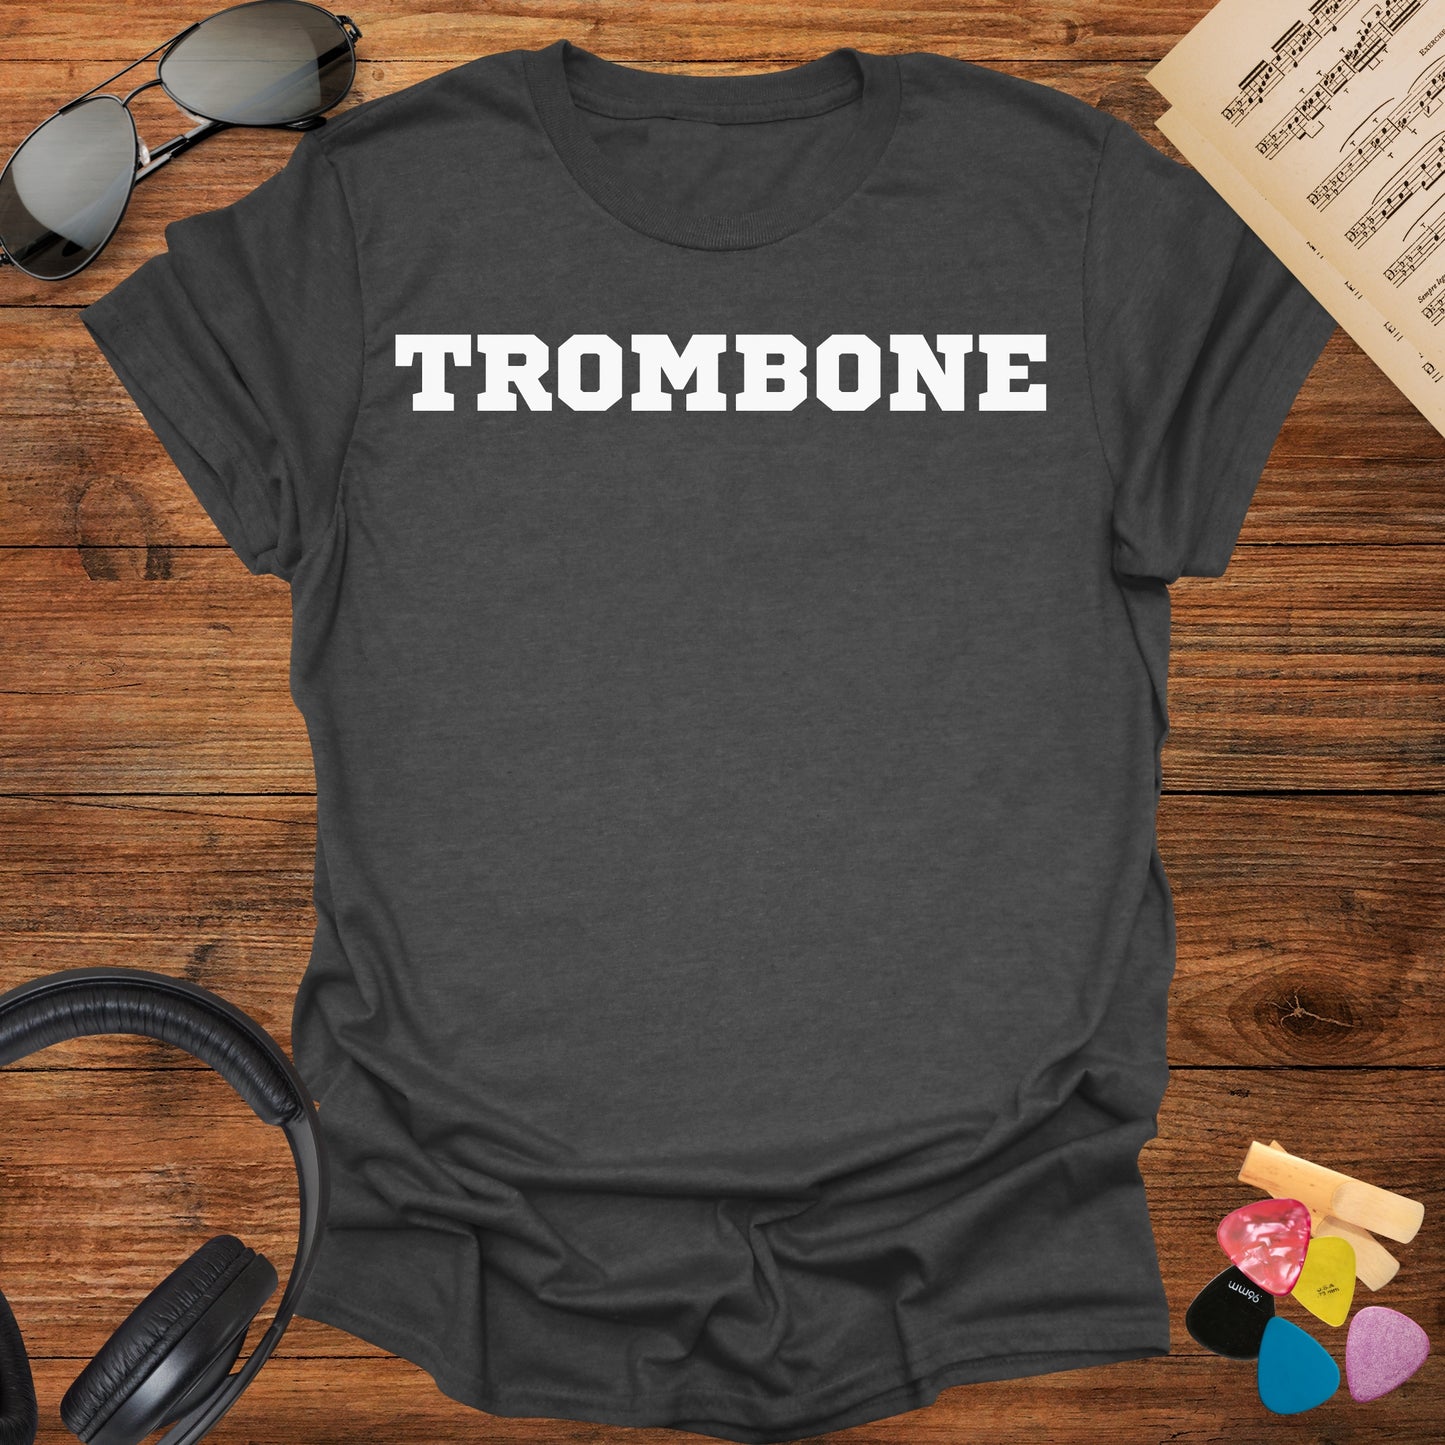 Trombone Tshirt